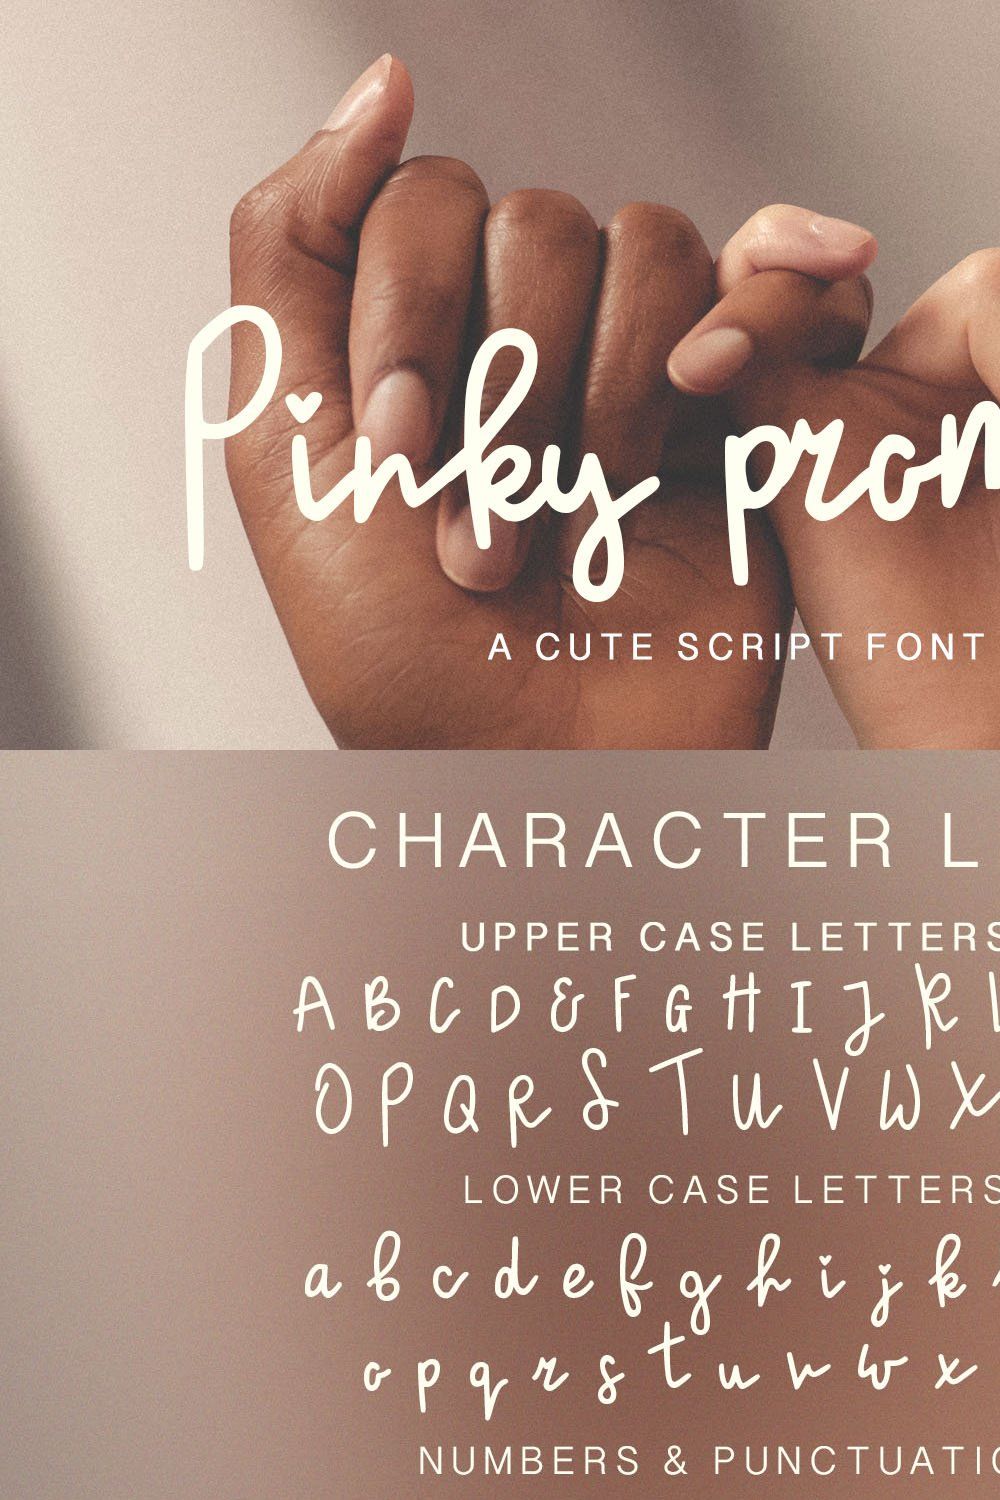 Pinky Promise - A Cute Script Font pinterest preview image.